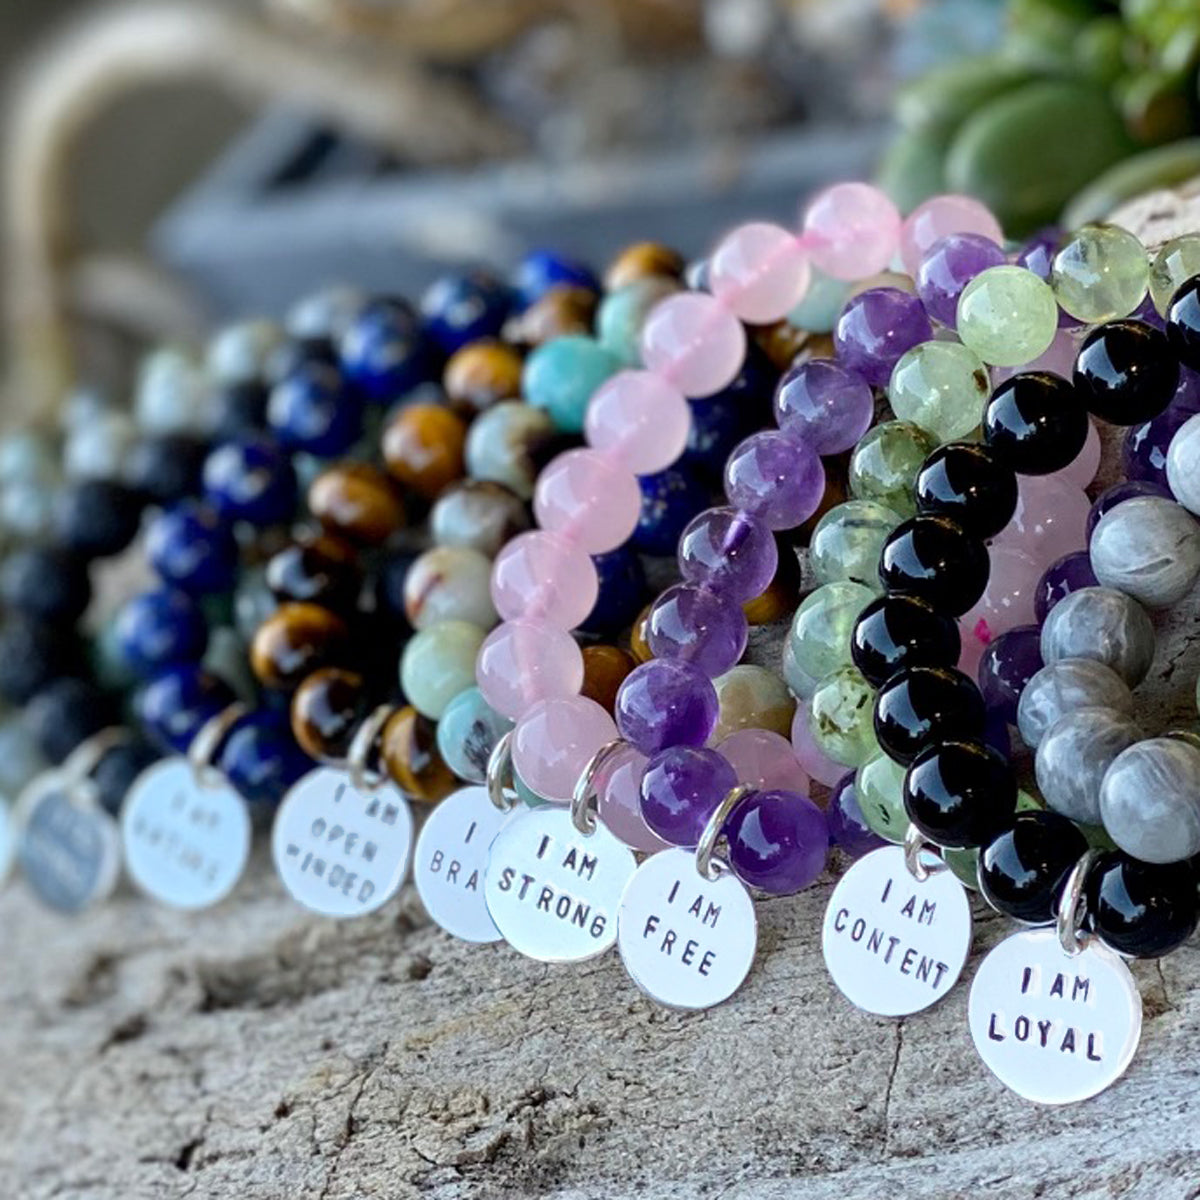 7 Chakra Healing Crystals Bracelet – Yoga Mandala Shop